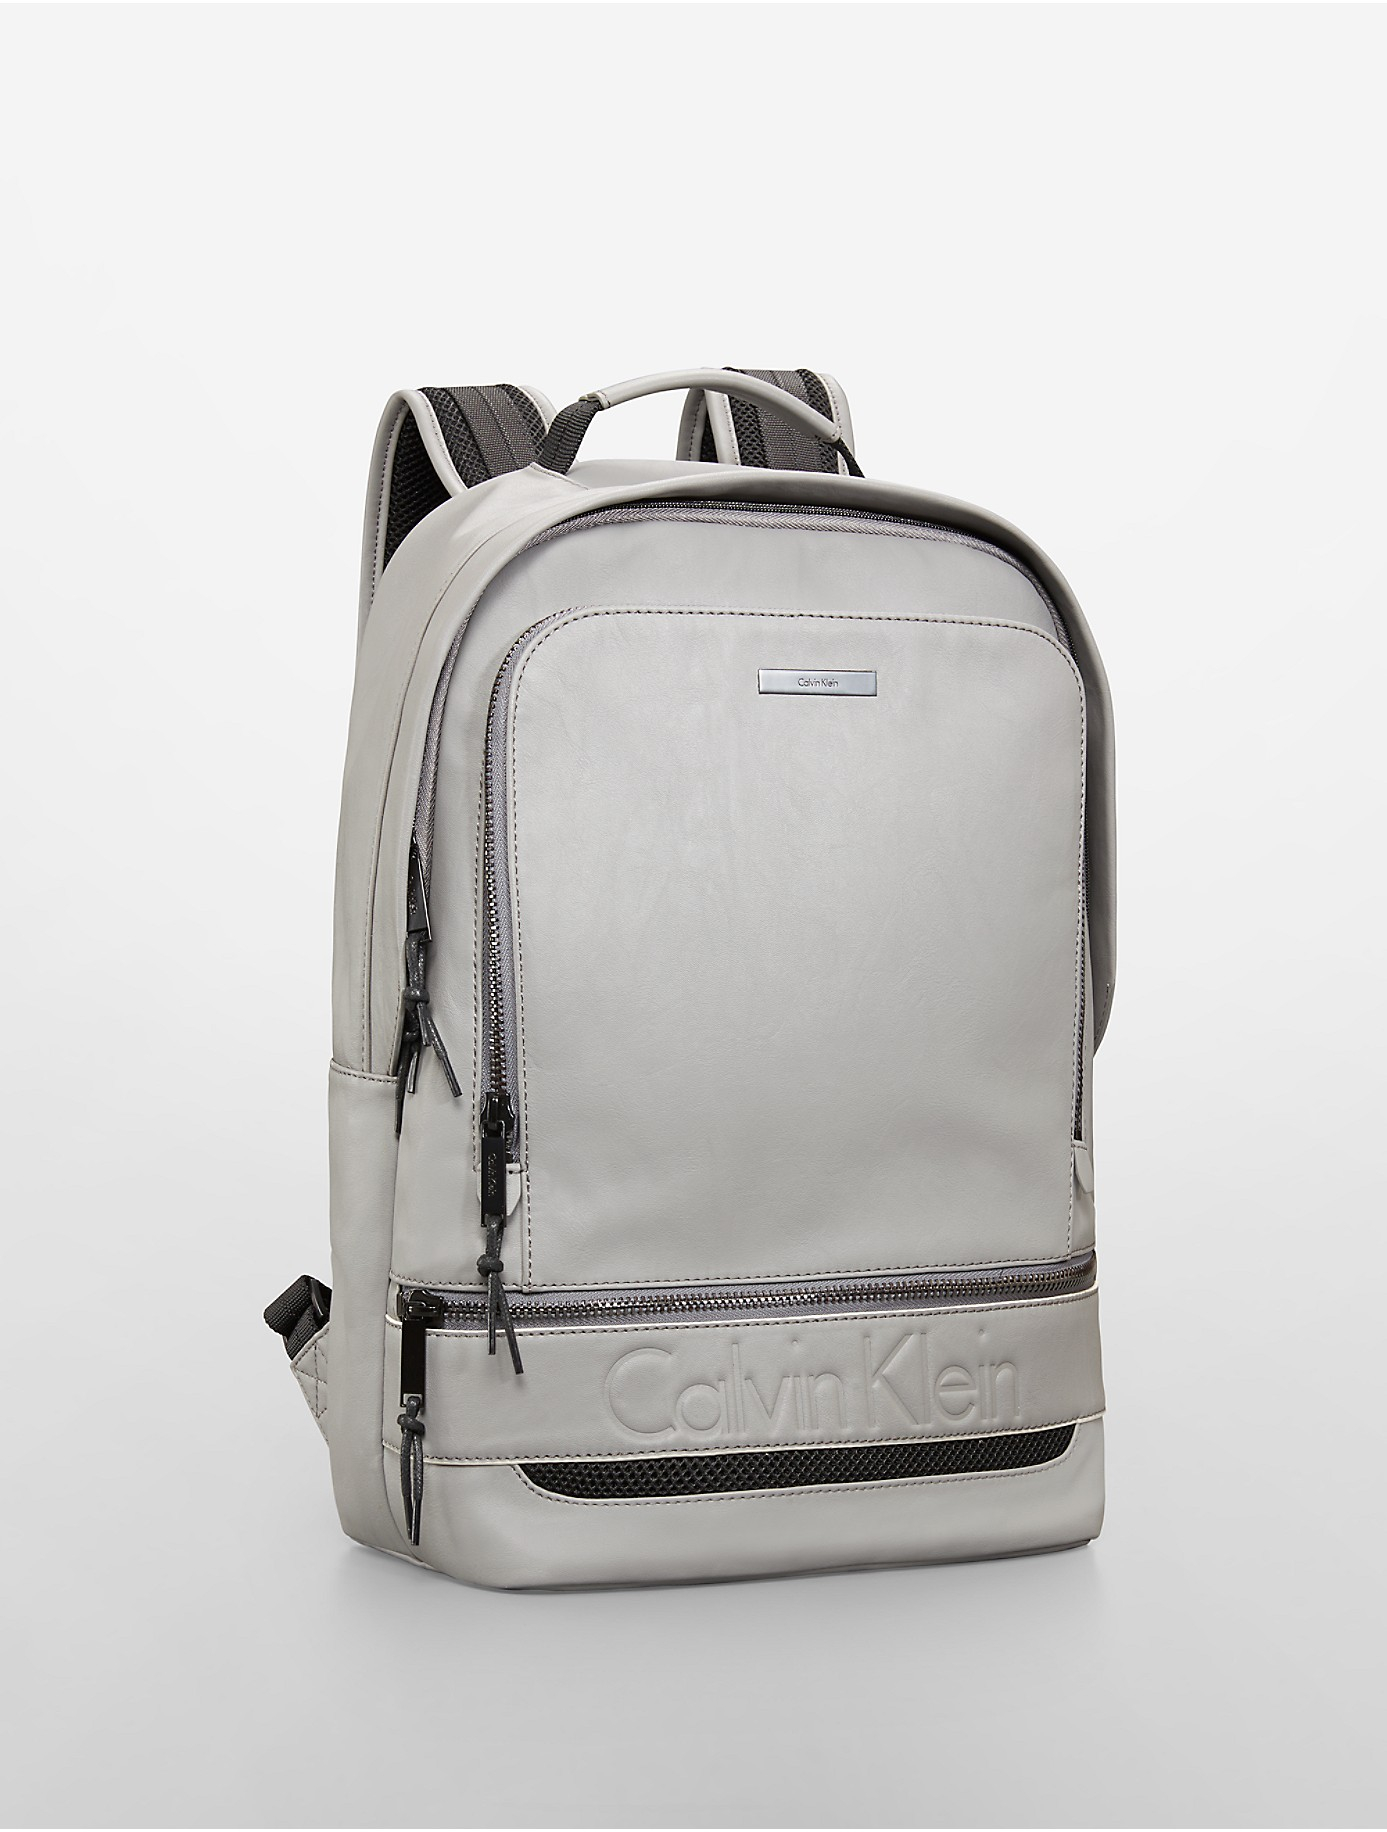 Calvin Klein Asher Backpack in Grey (Gray) for Men - Lyst